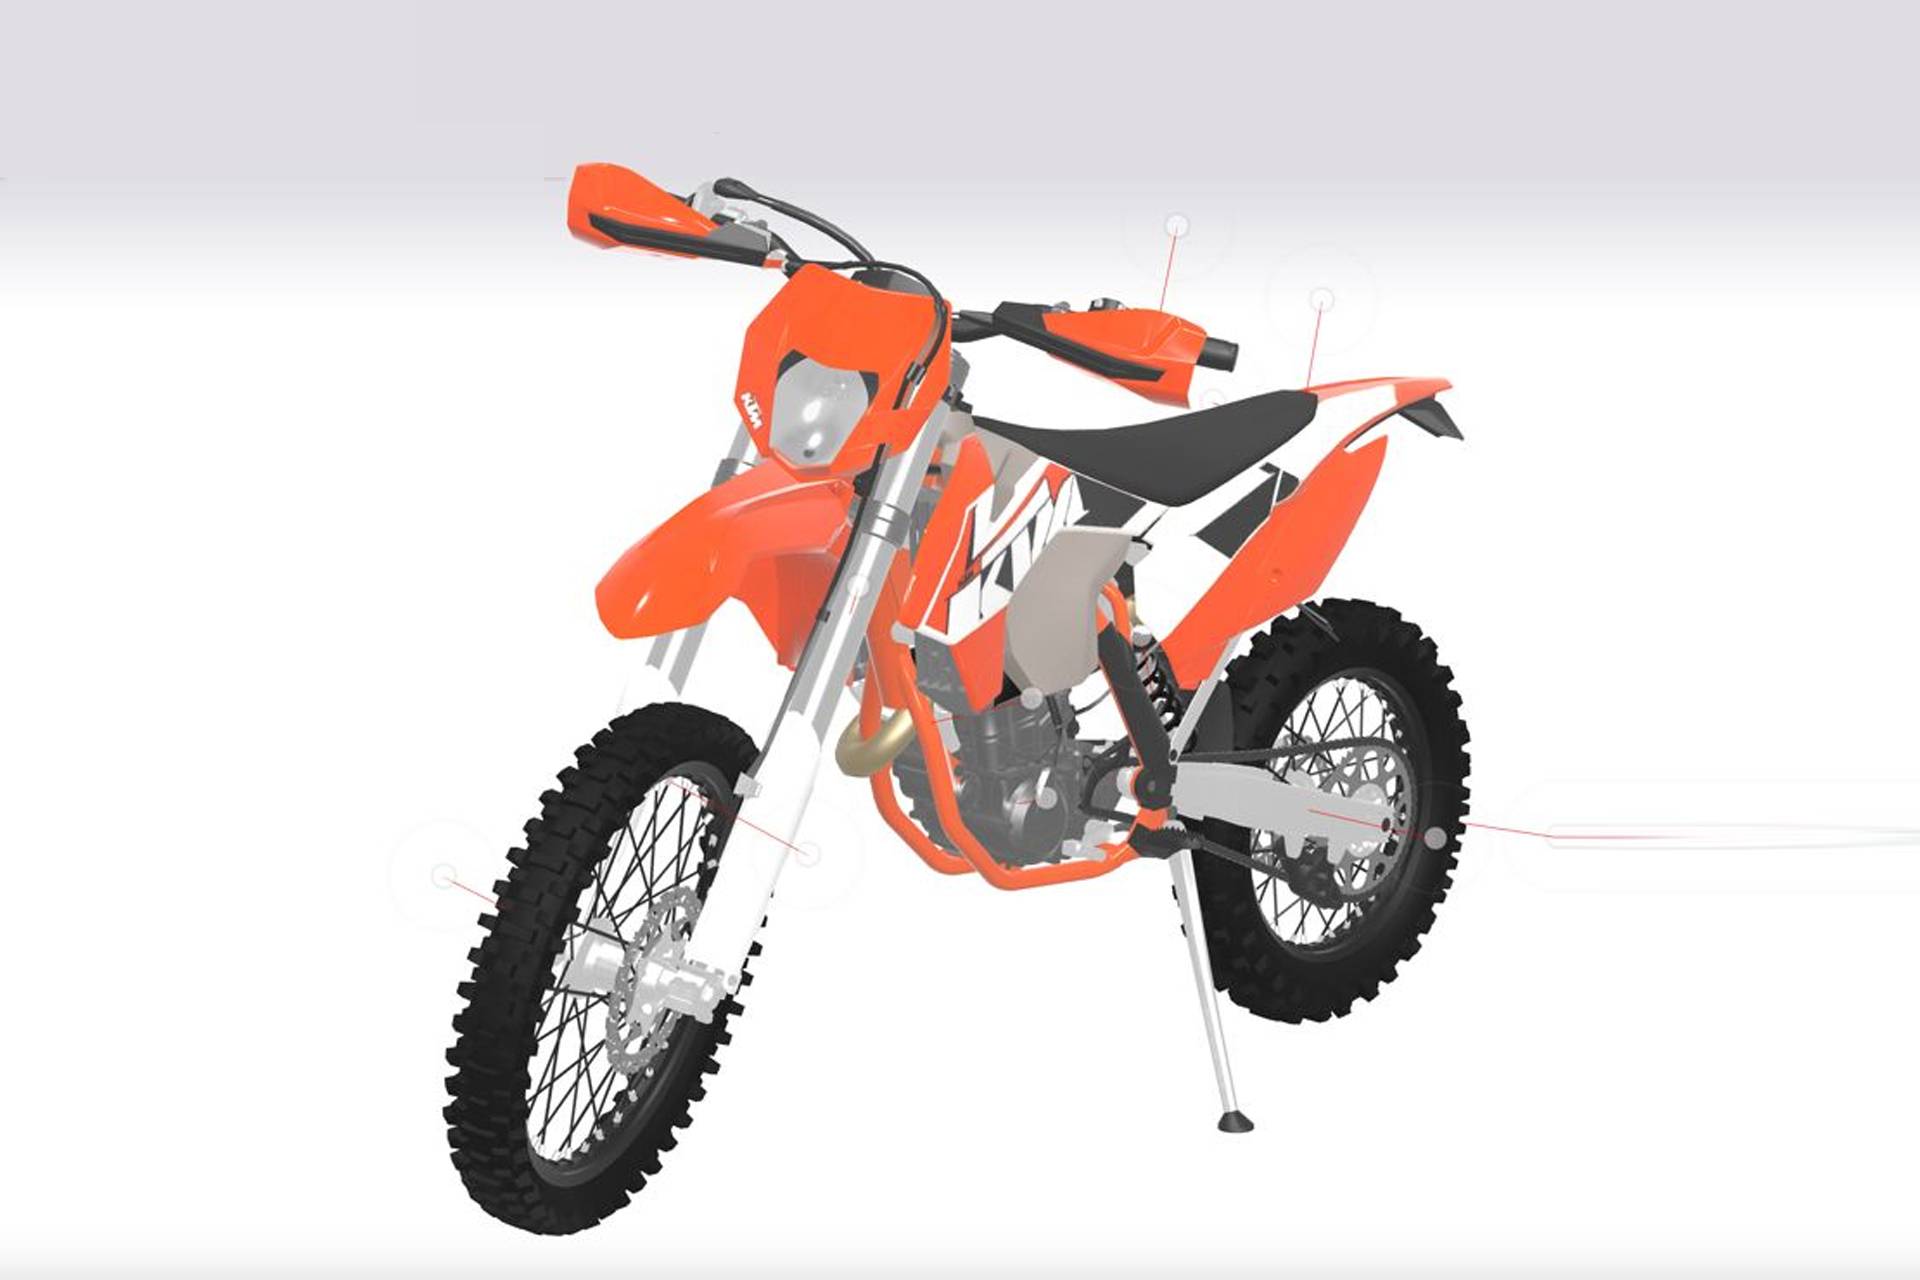 KTM Dirt Bike 450 EXC – 3D Products Display Online